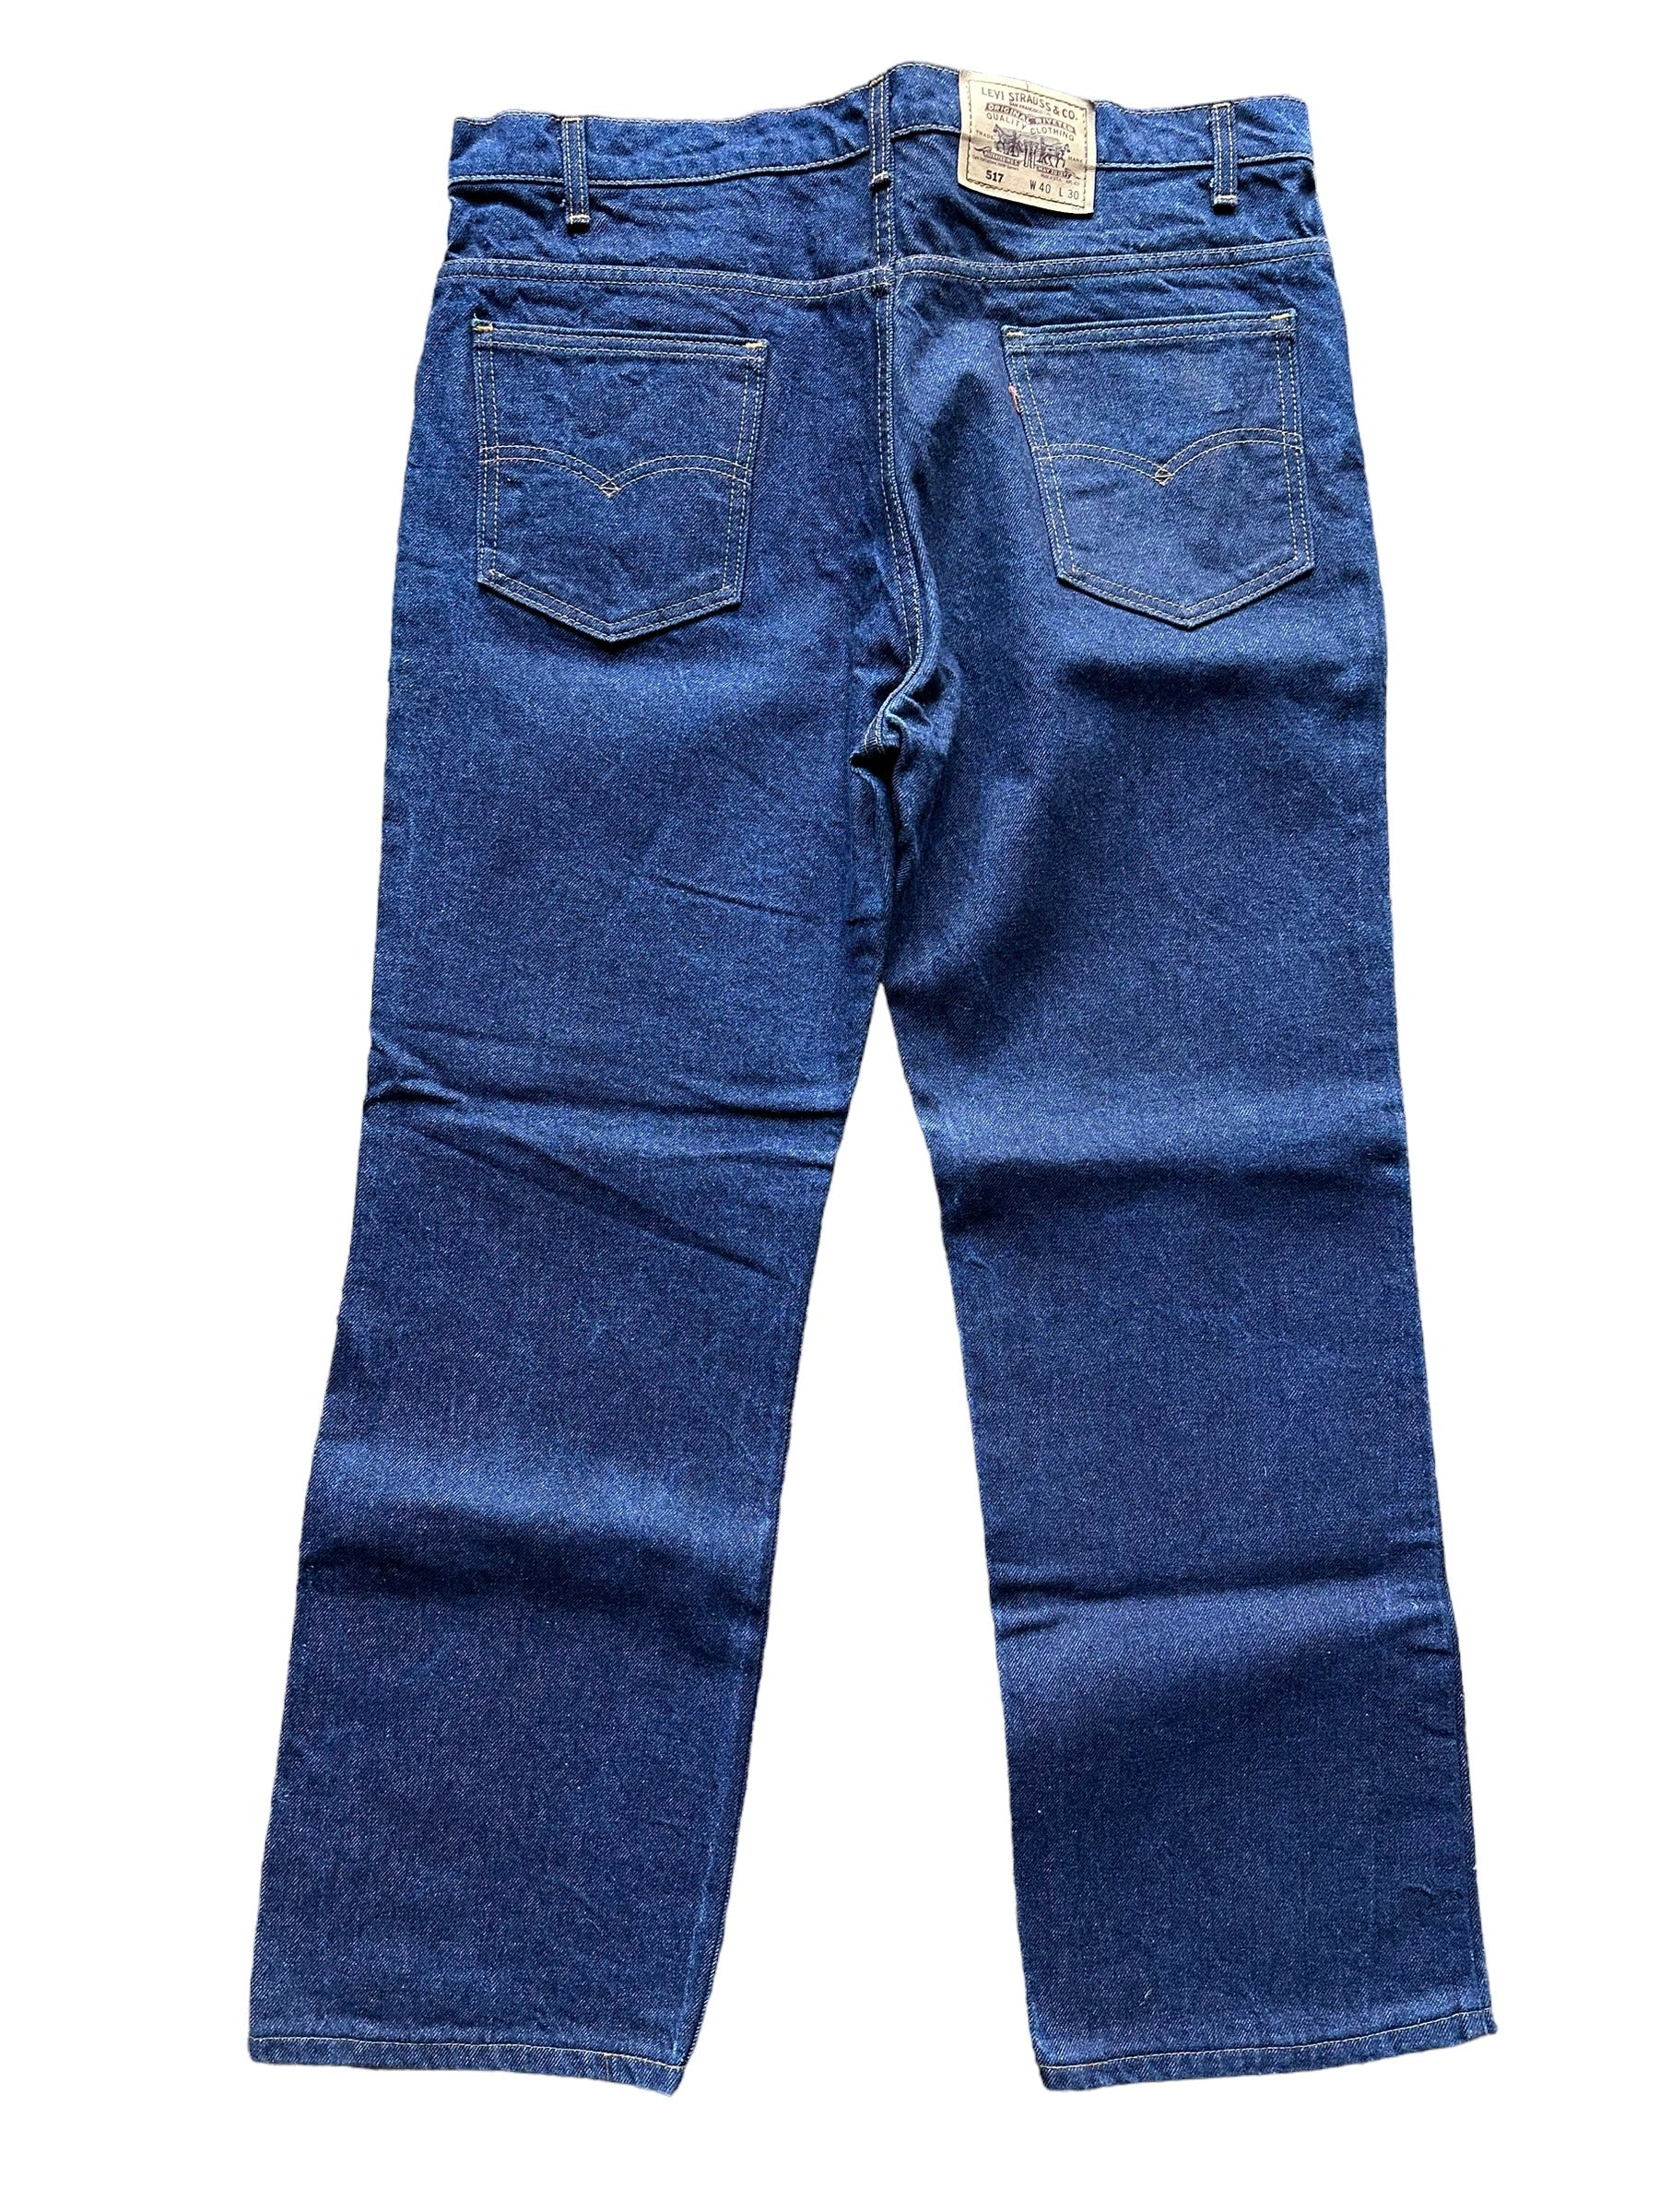 Full back view of Deadstock 90s USA Levi's 501 Black Jeans 26x33 | Seattle Deadstock Vintage Jeans | Barn Owl Vintage Denim